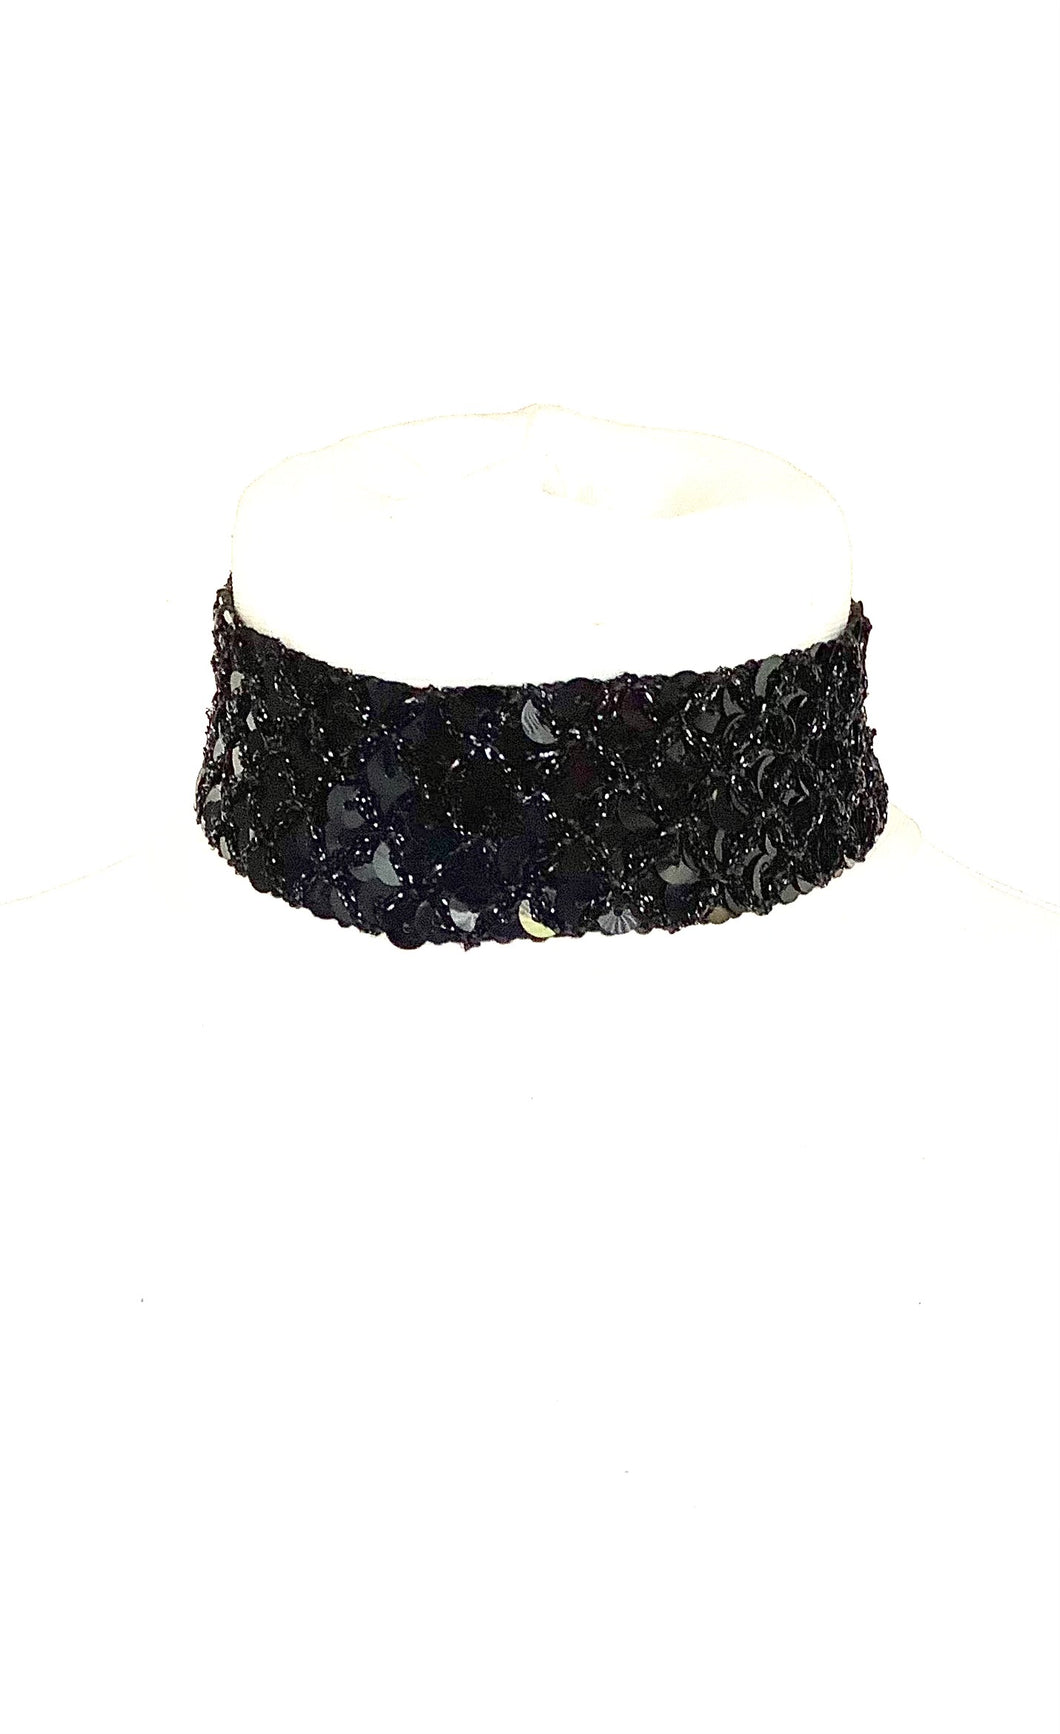 Black Sequin Choker Necklace